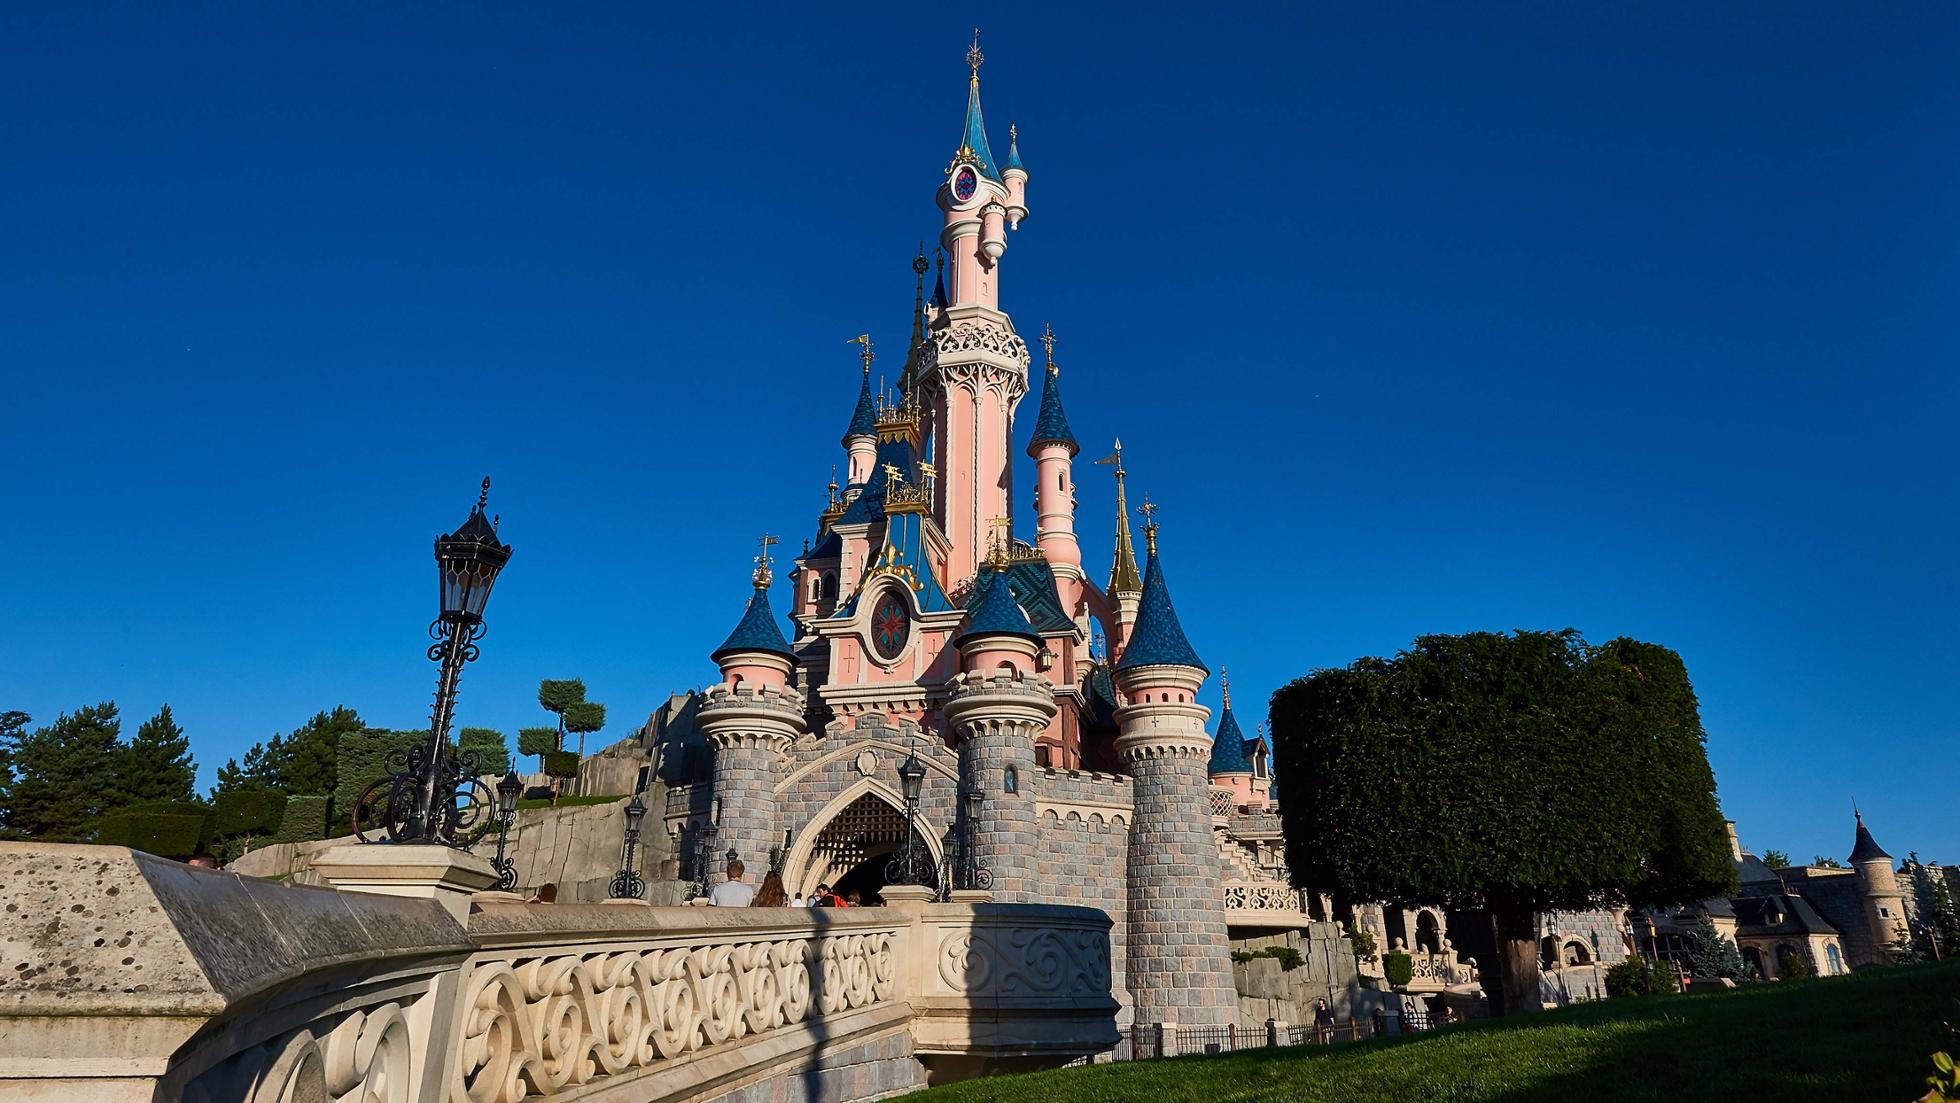 Disneyland Paris' Sleeping Beauty Castle by night : r/disney